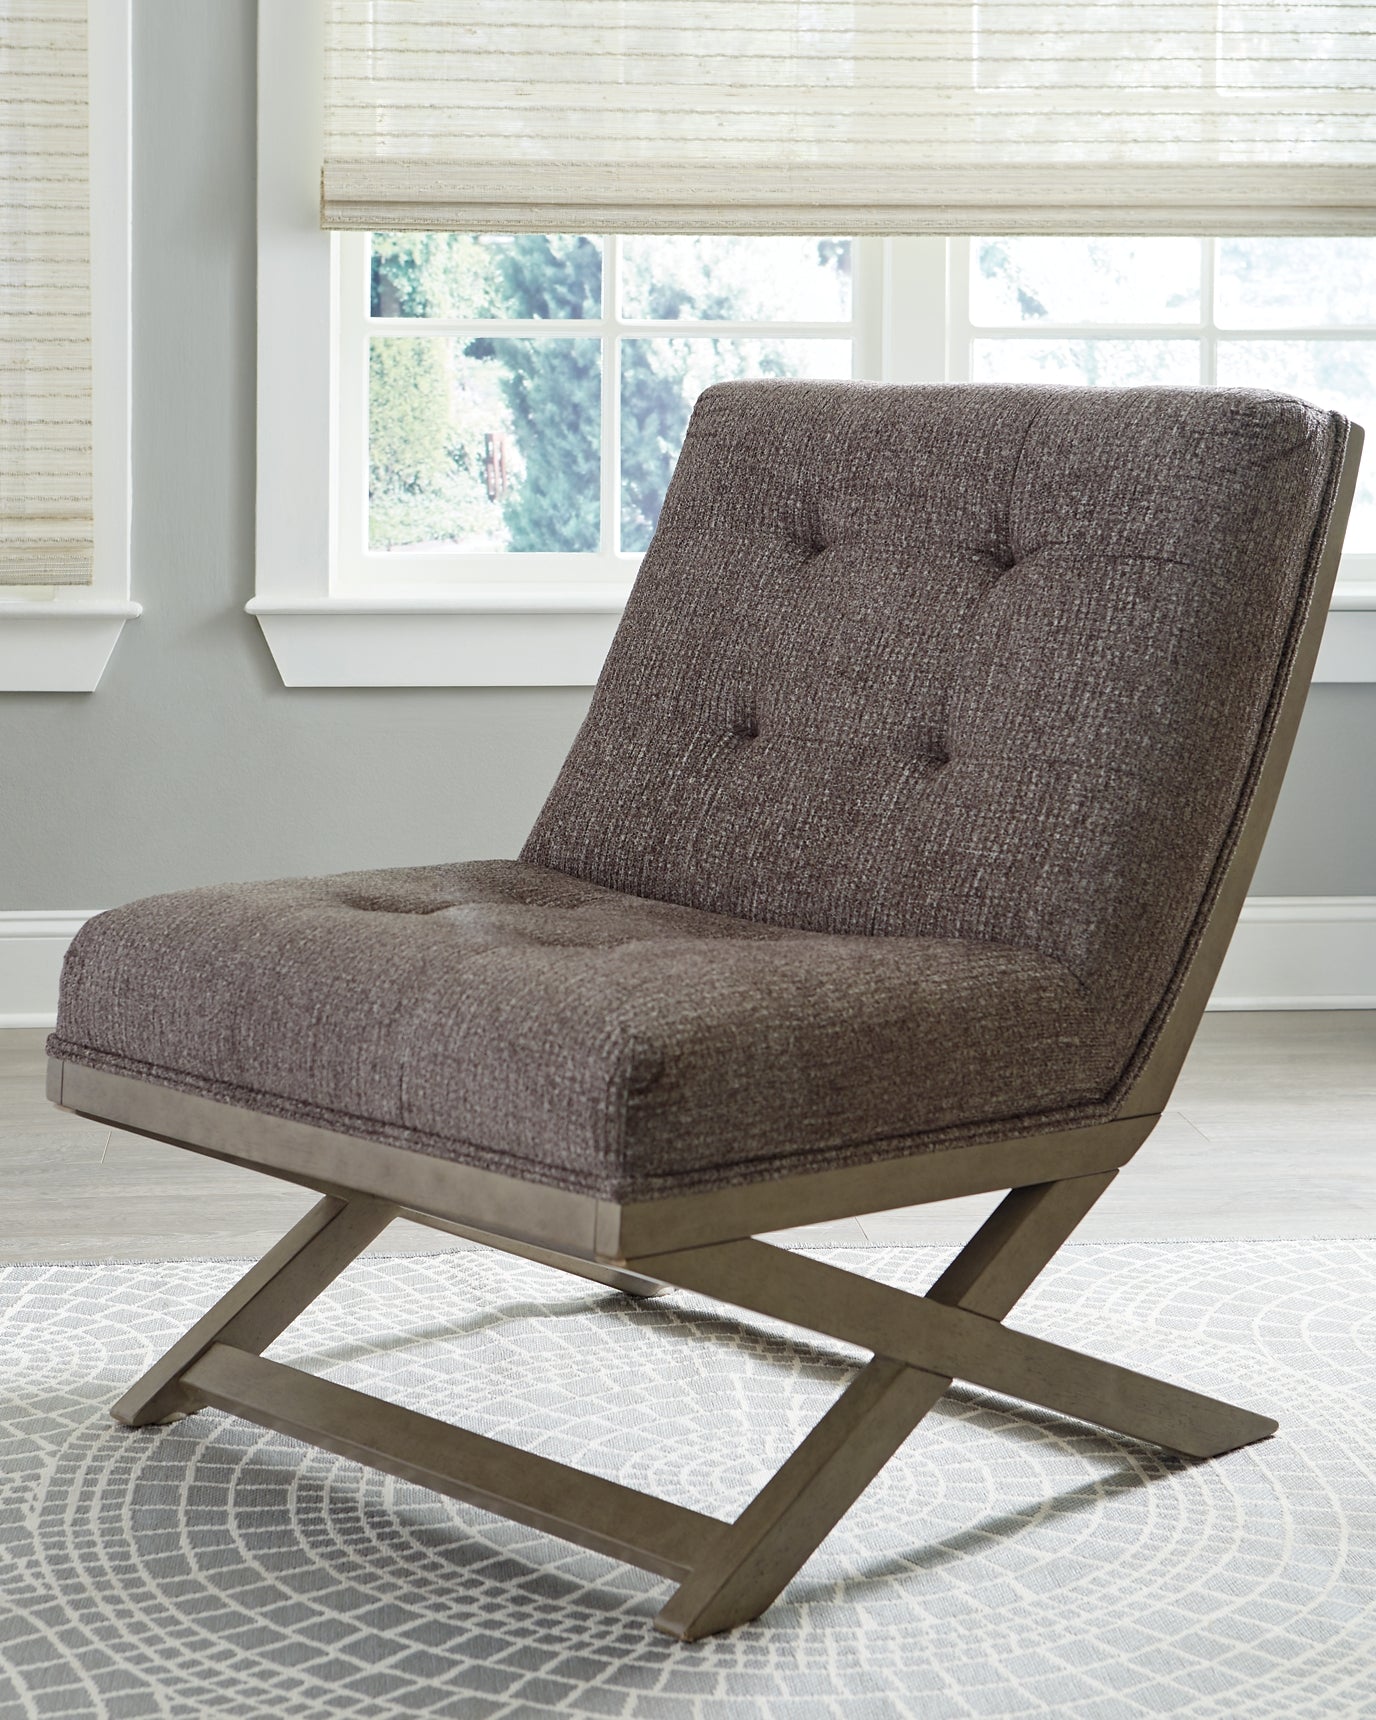 Sidewinder Accent Chair at Cloud 9 Mattress & Furniture furniture, home furnishing, home decor